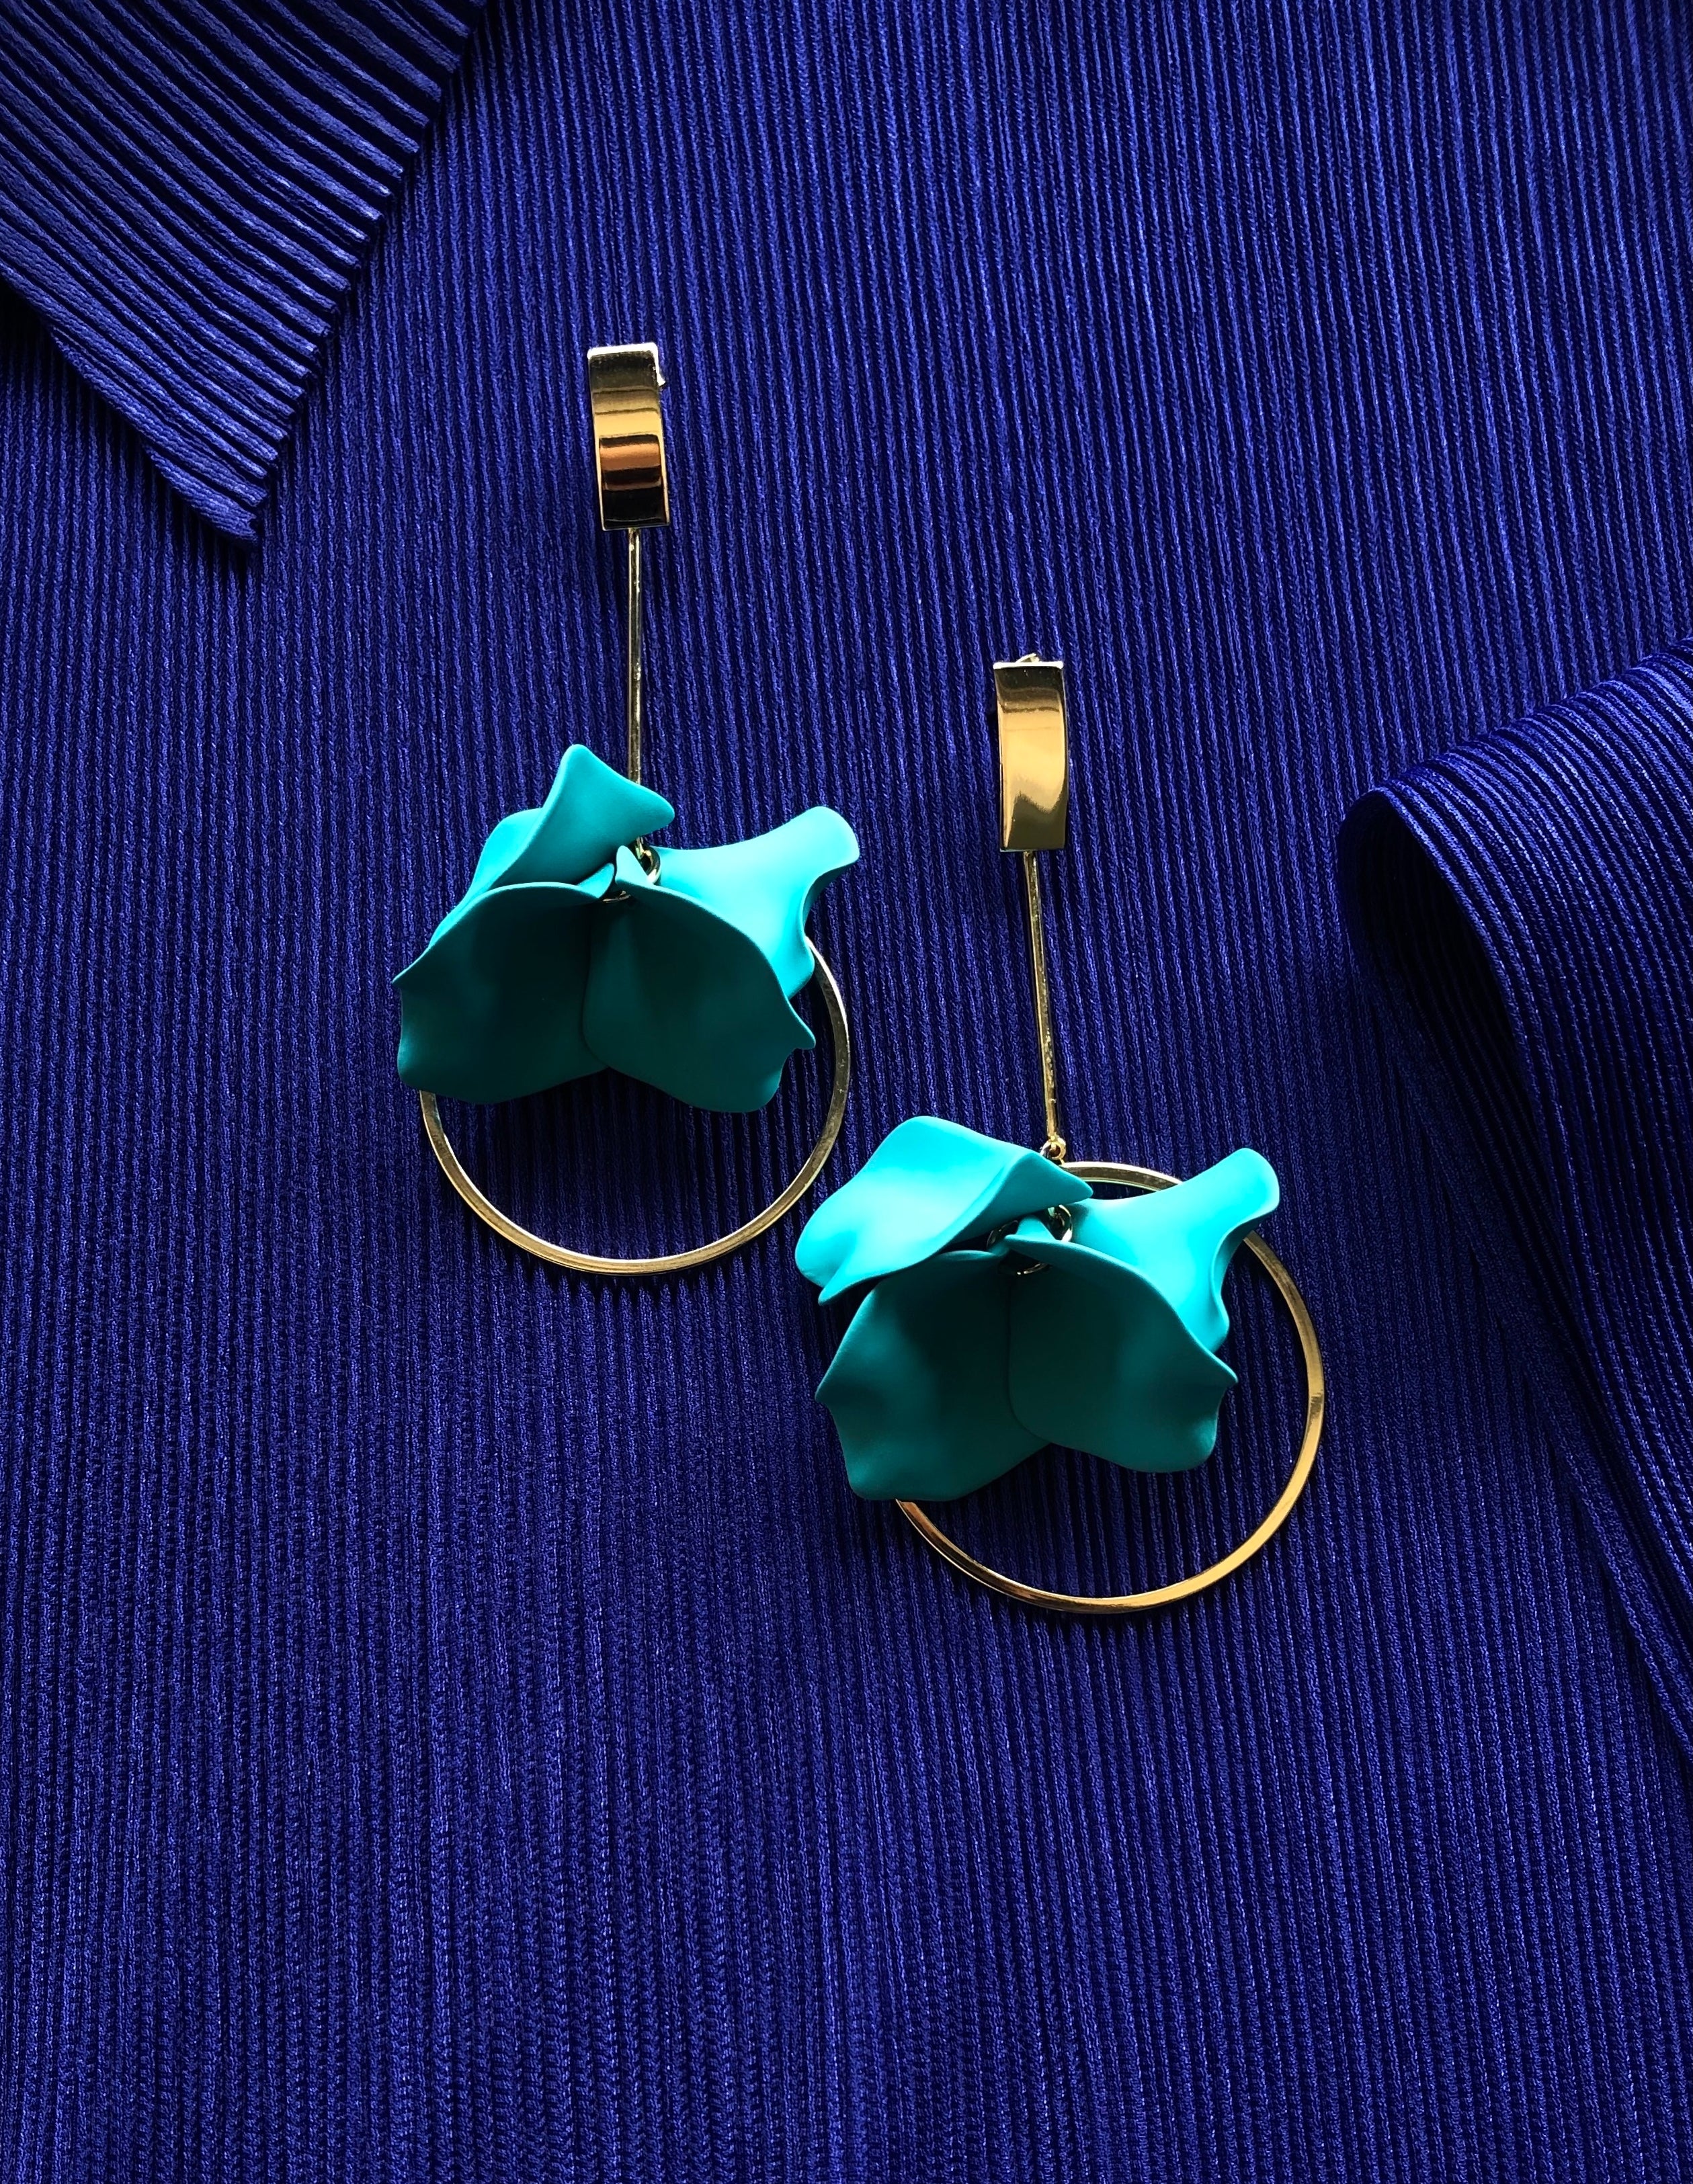 Suspended Pendulum Petal Earrings - Turquoise